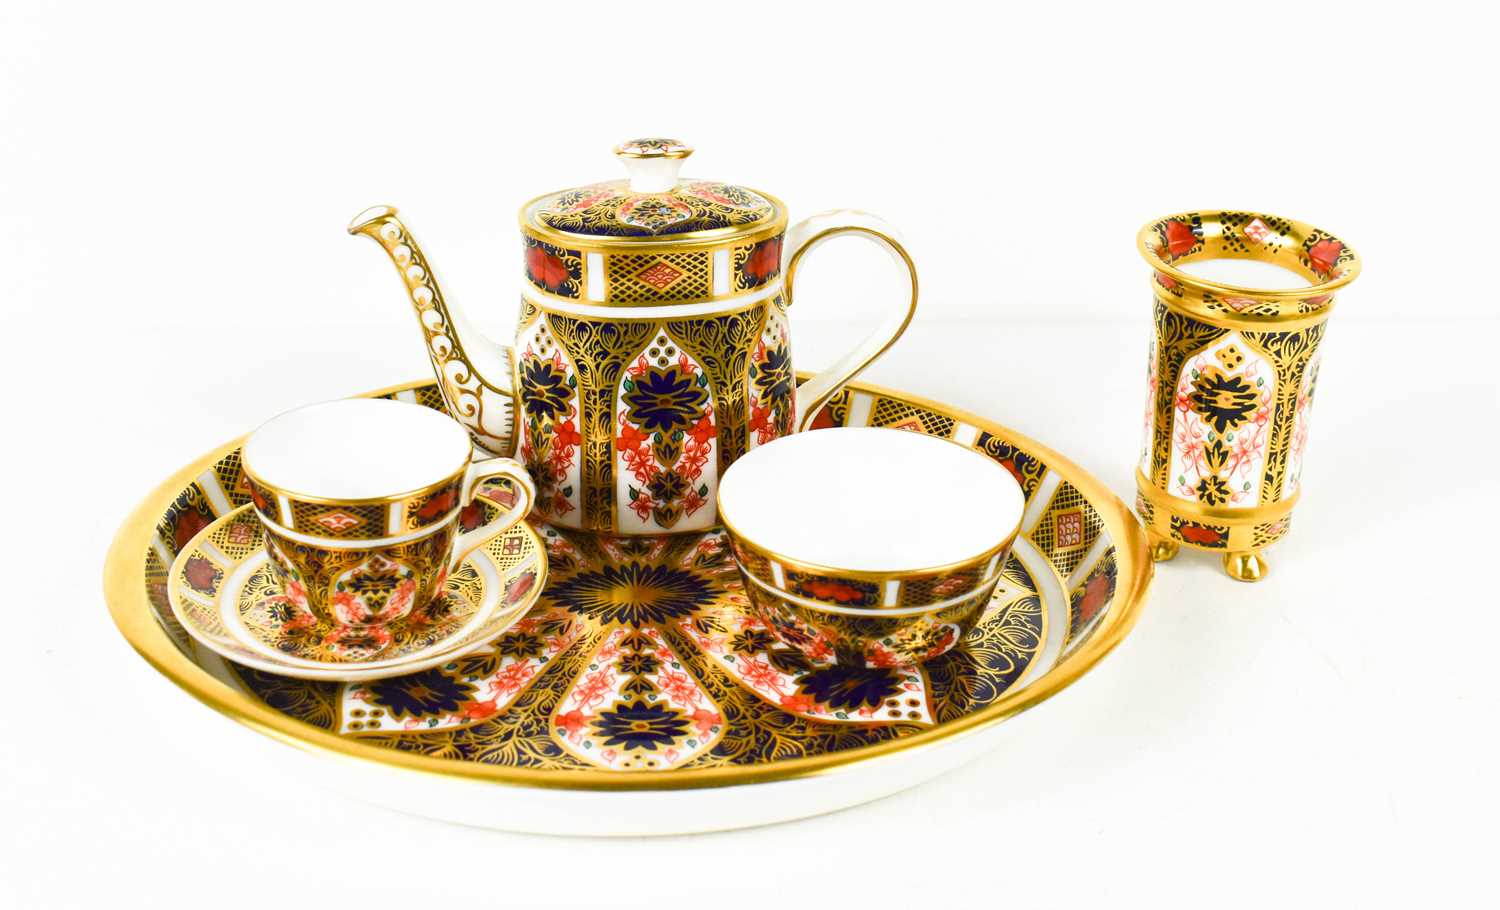 A Royal Crown Derby miniature tea service, comprising tea pot, cup & saucer and sugar bowl, together